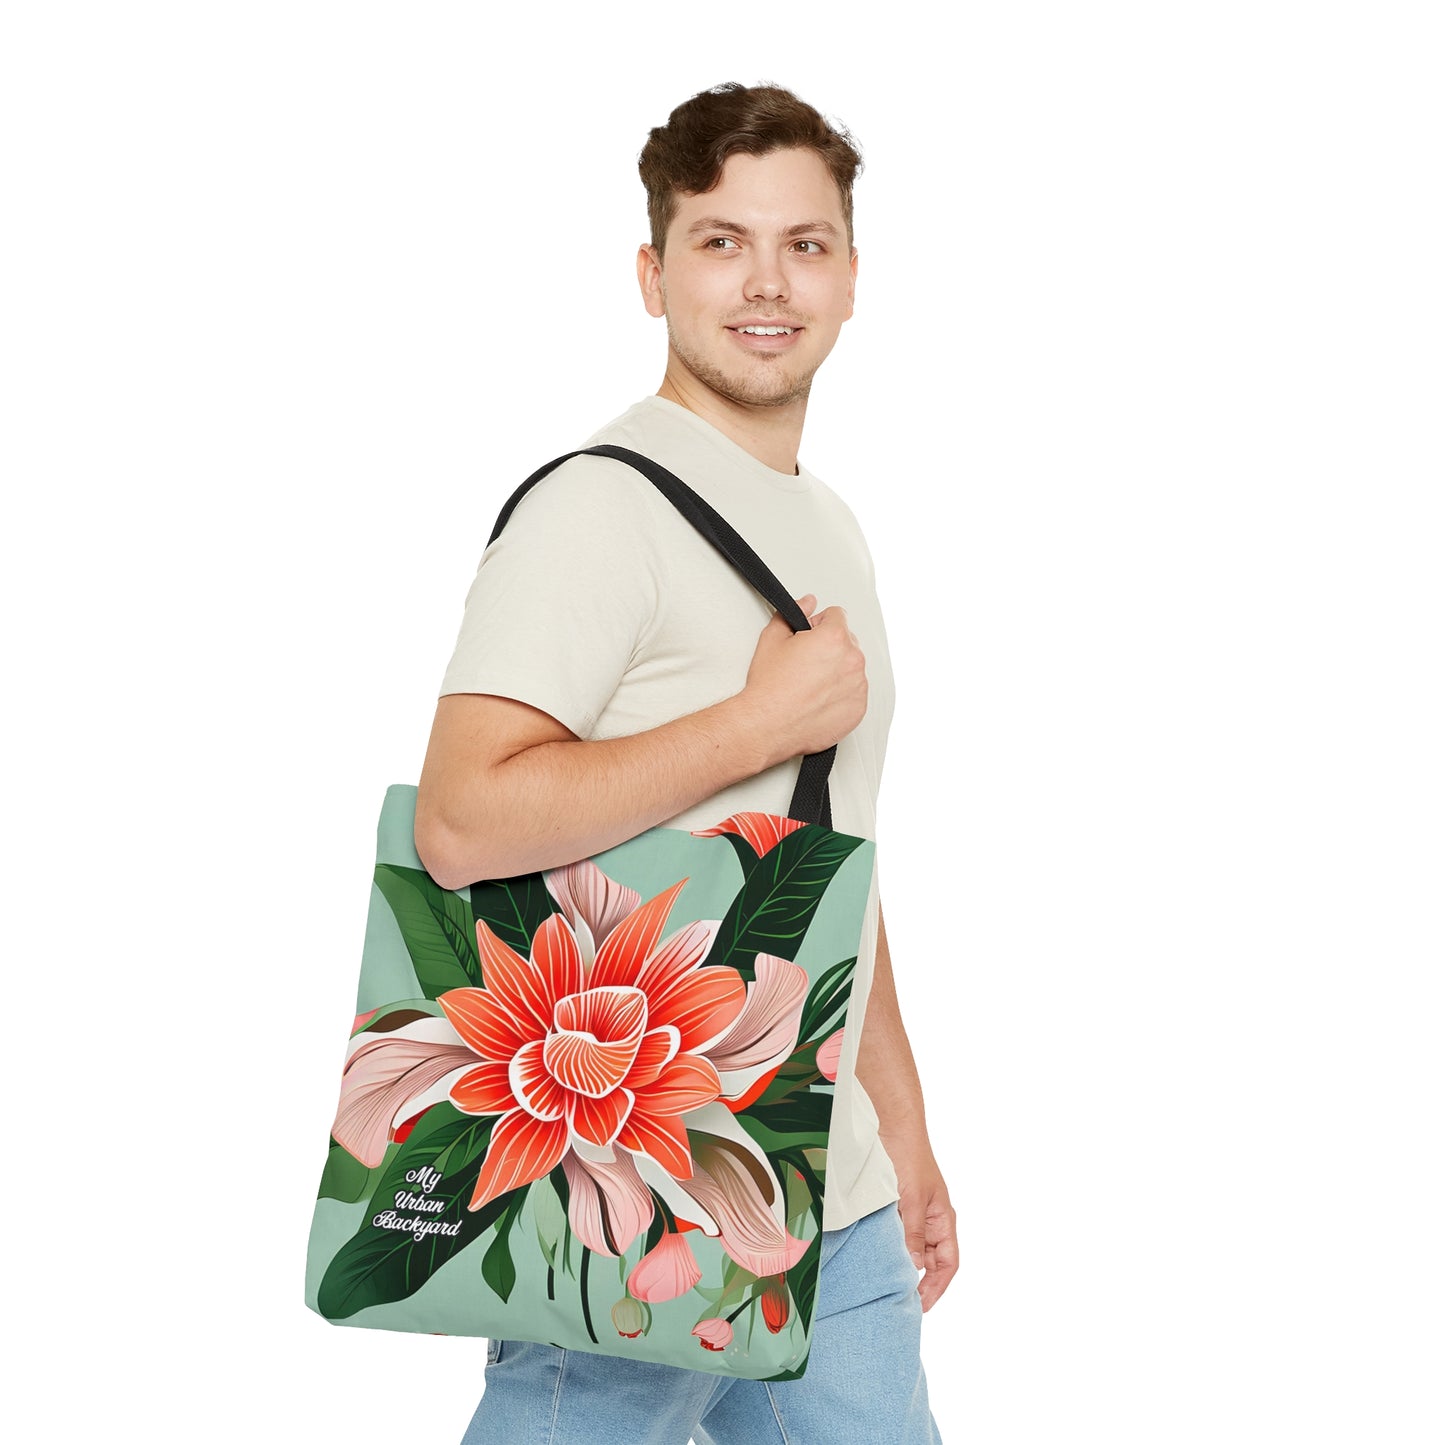 Reusable Tote Bag for Everyday Use, Shoulder Bag w Cotton Handles - Large Flower